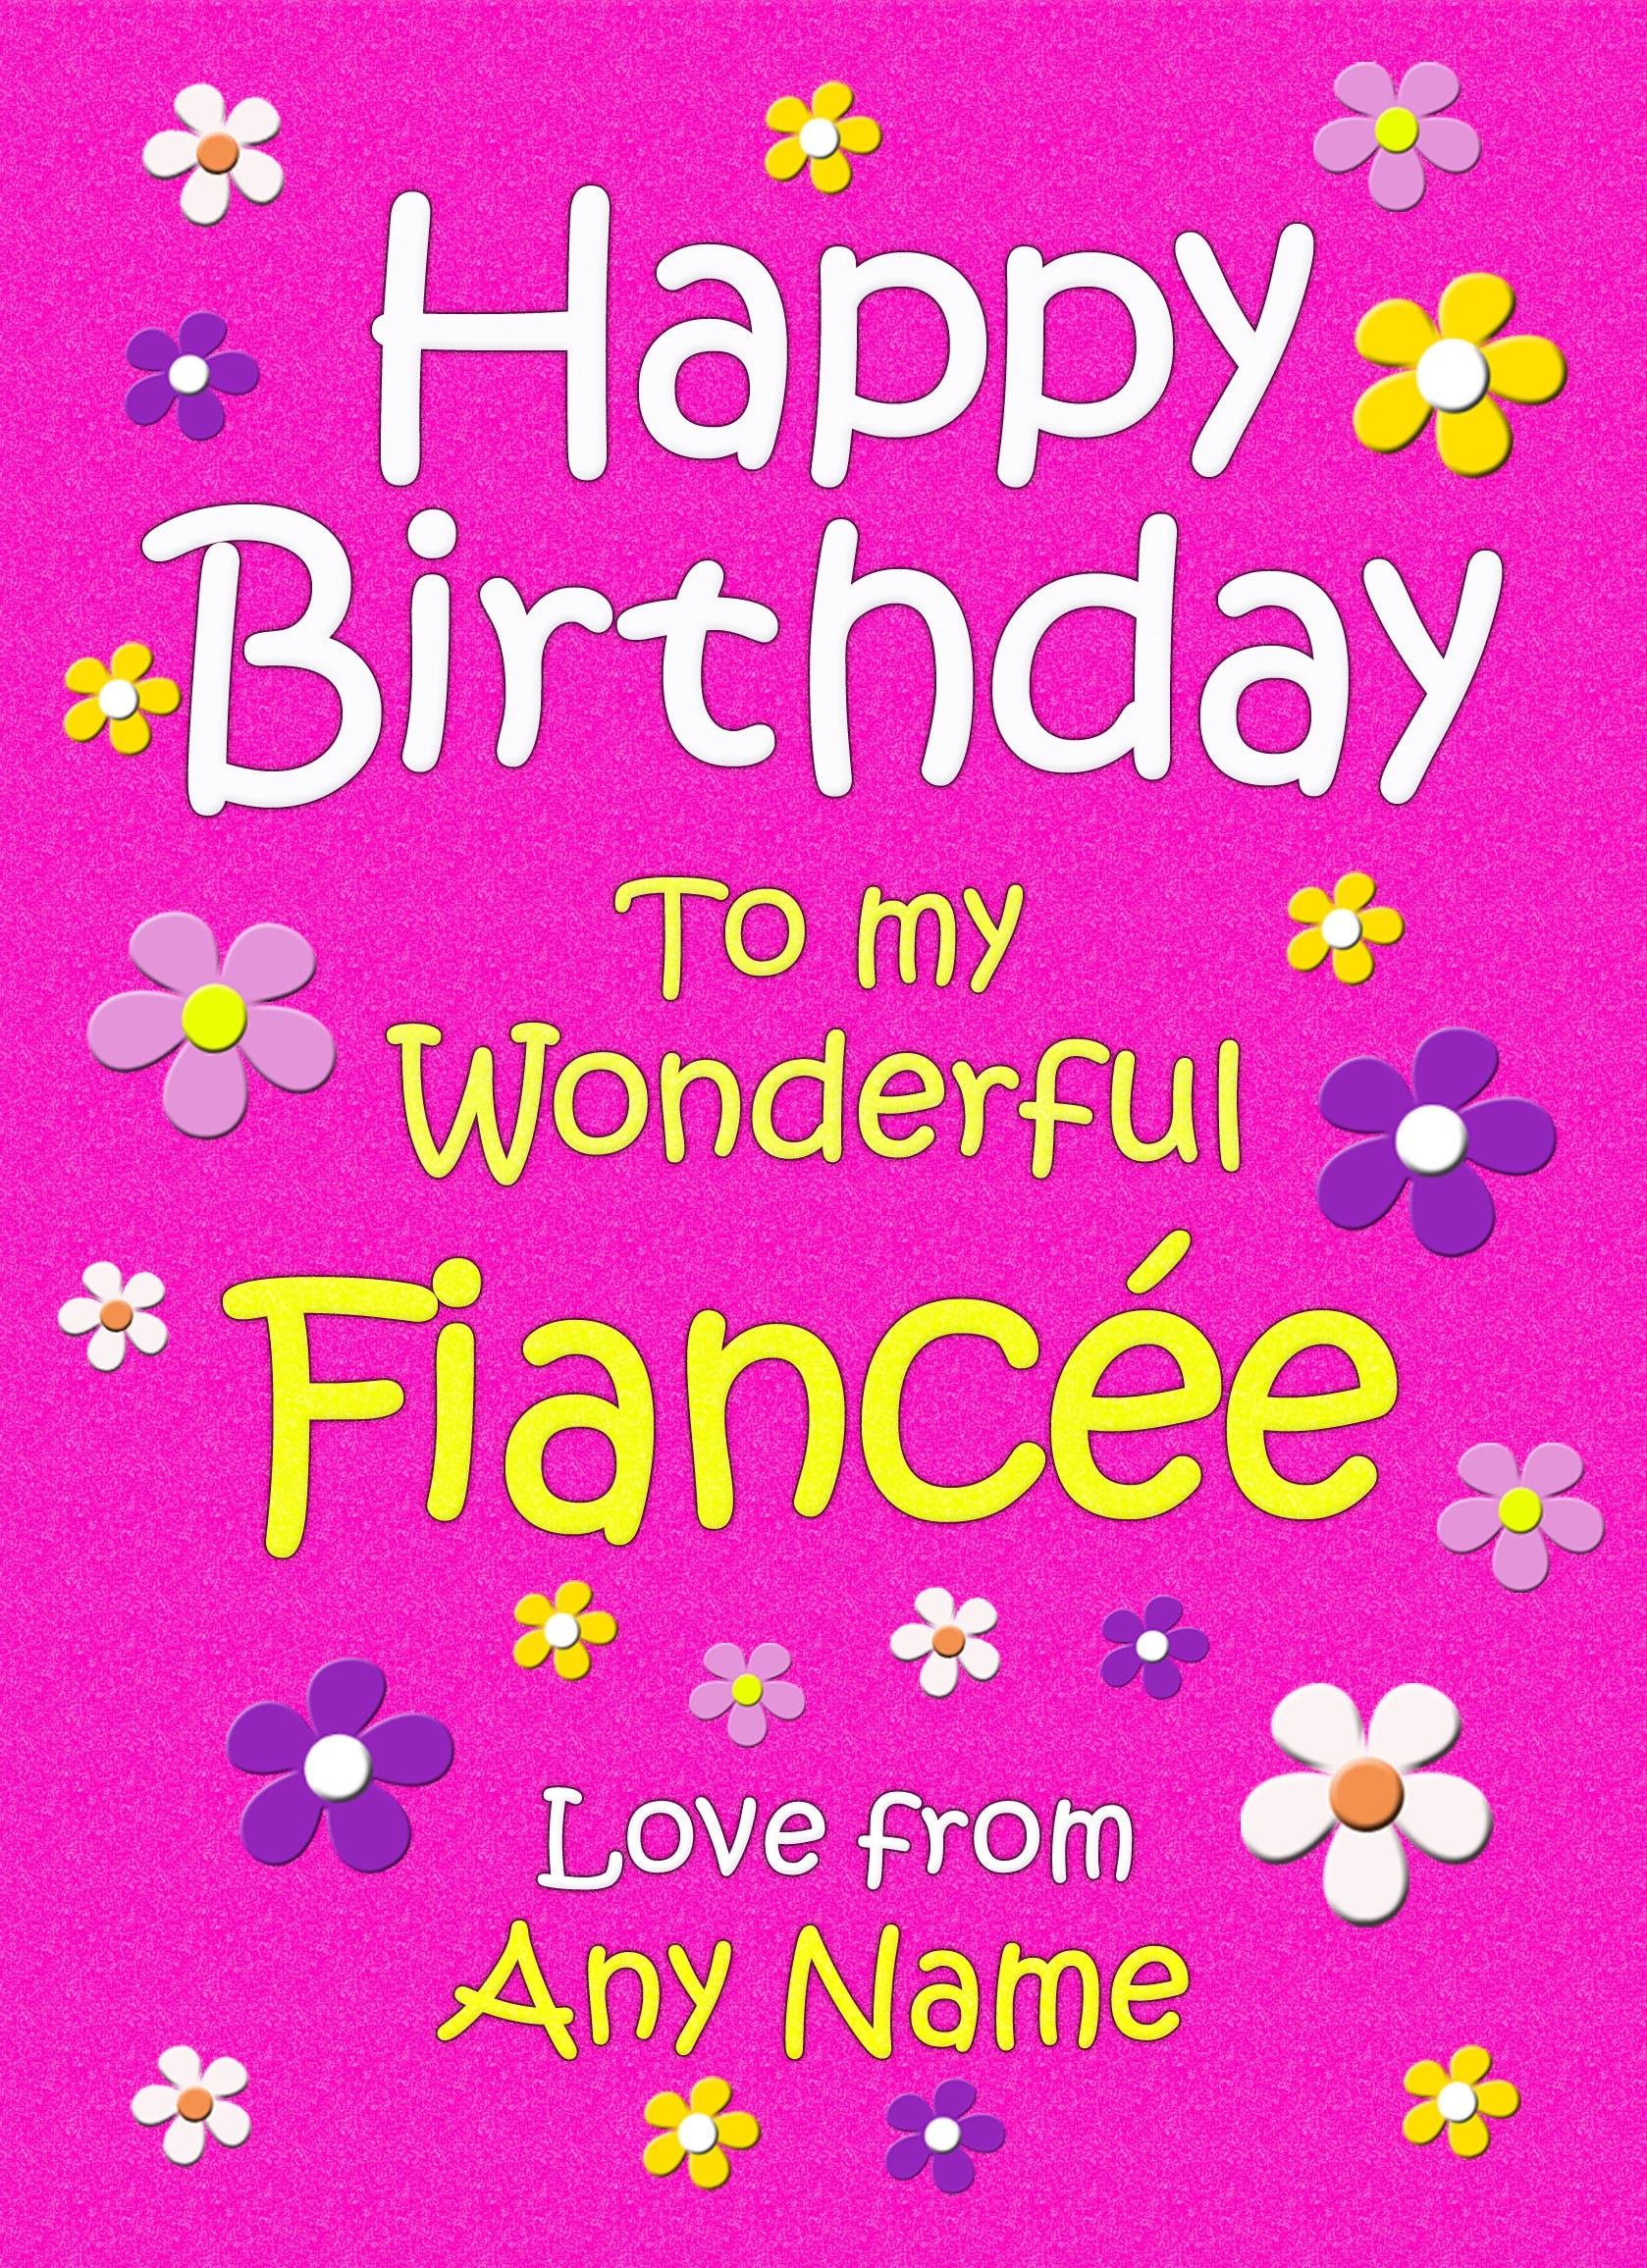 Personalised Fiancee Birthday Card (Cerise)